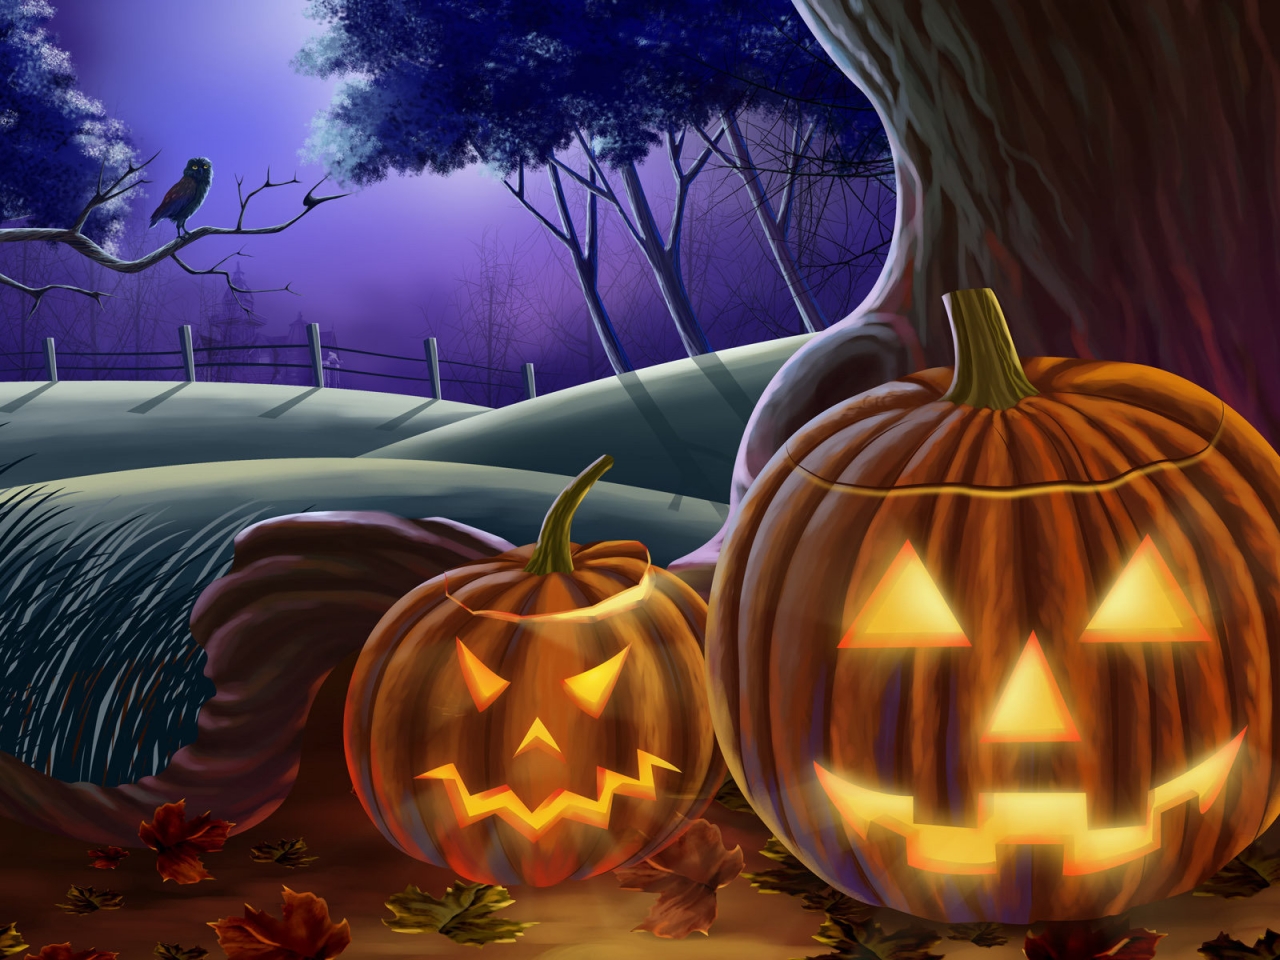 Illuminated Pumpkins for Halloween for 1280 x 960 resolution